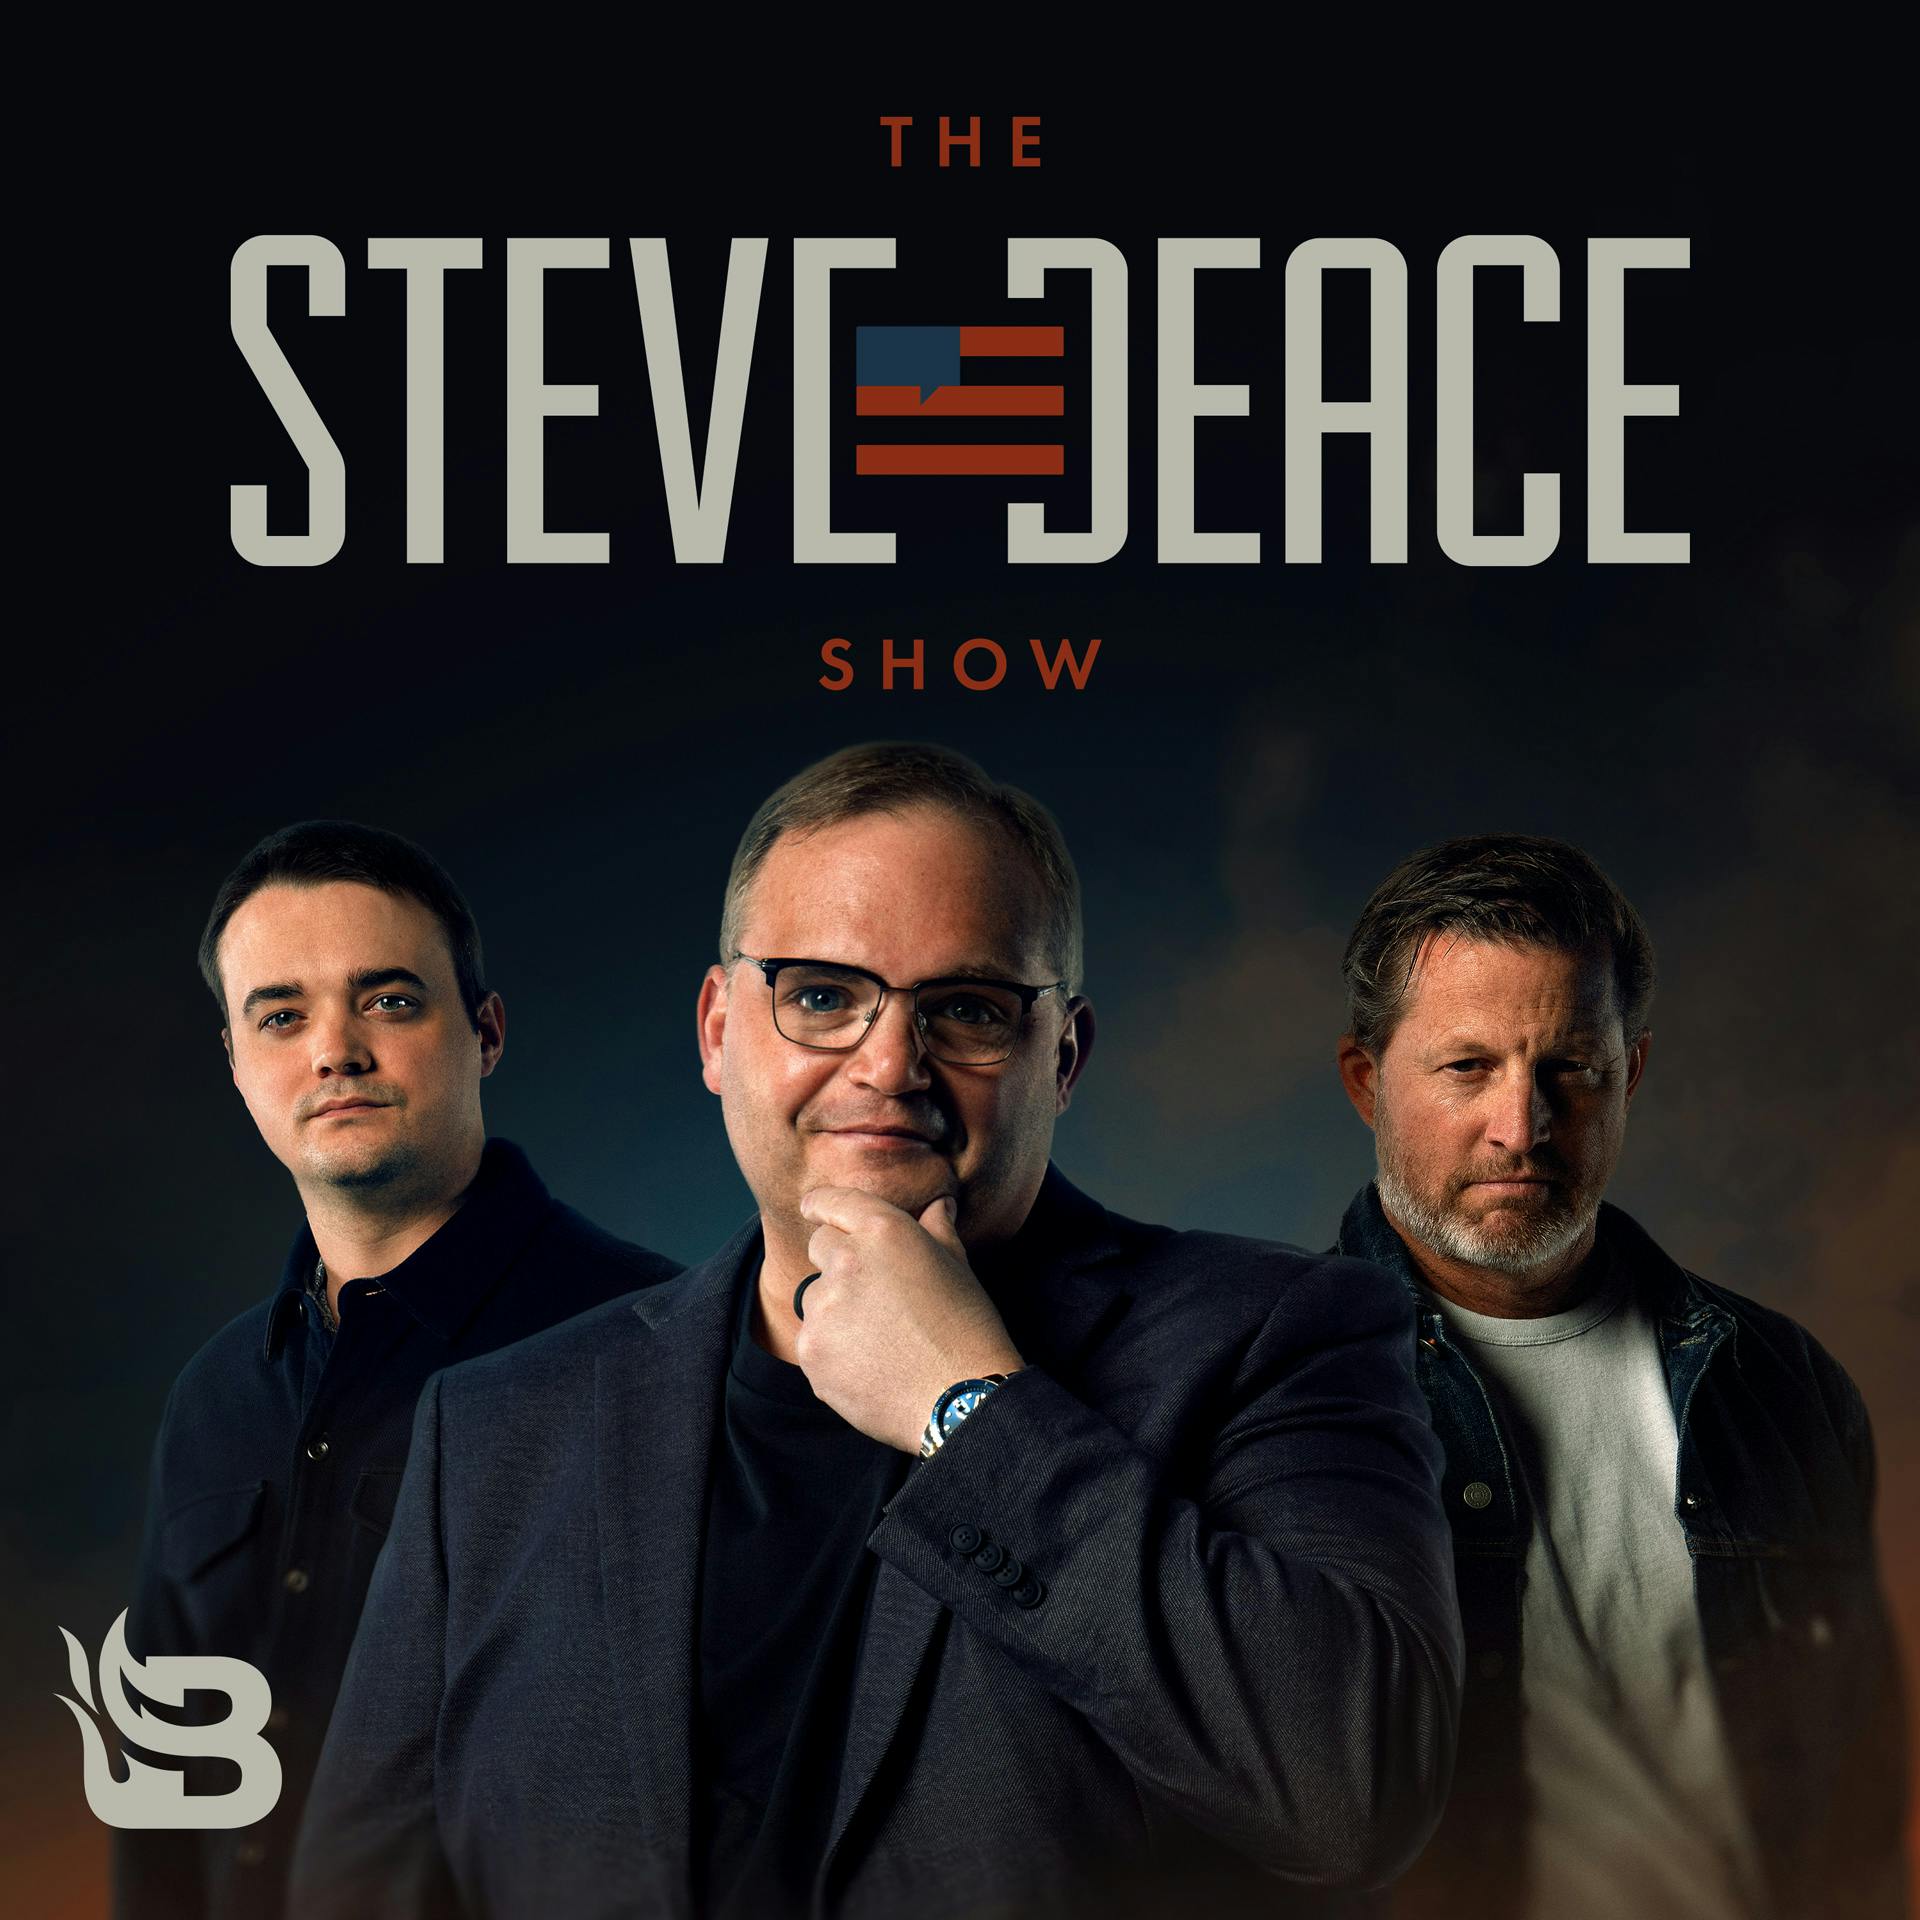 Steve Deace Show podcast